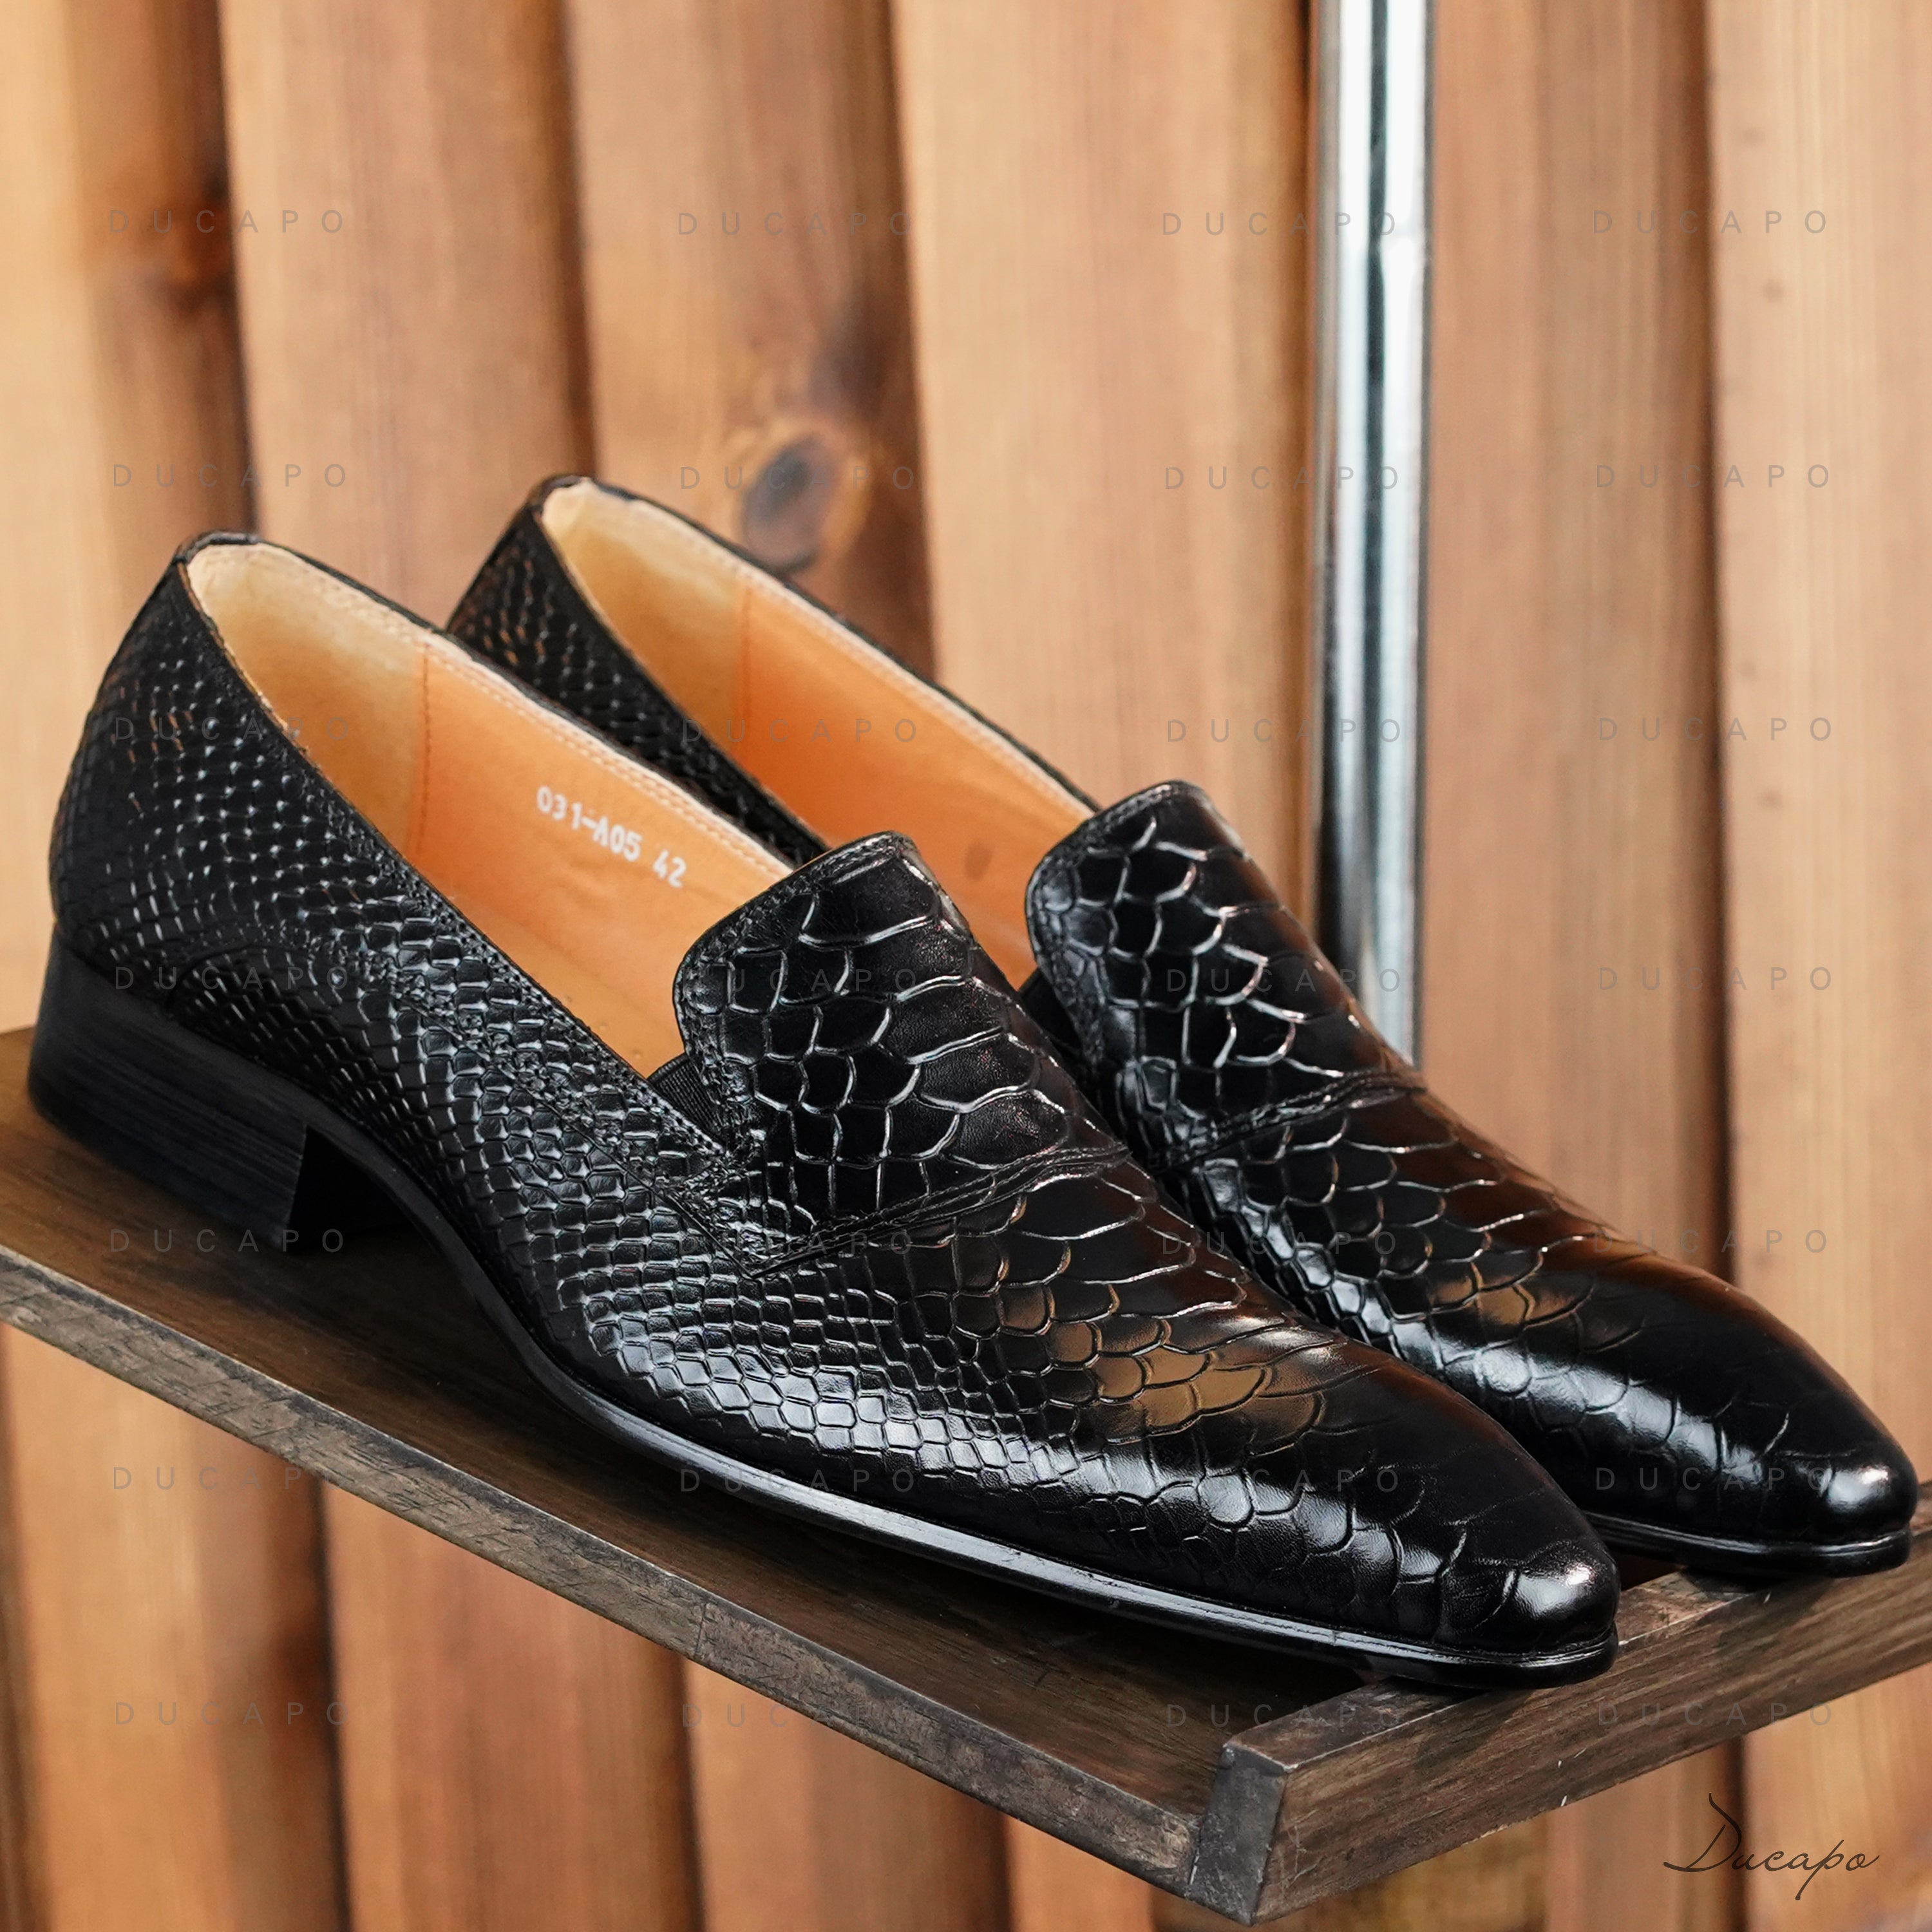 Ducapo Black Texture Loafers